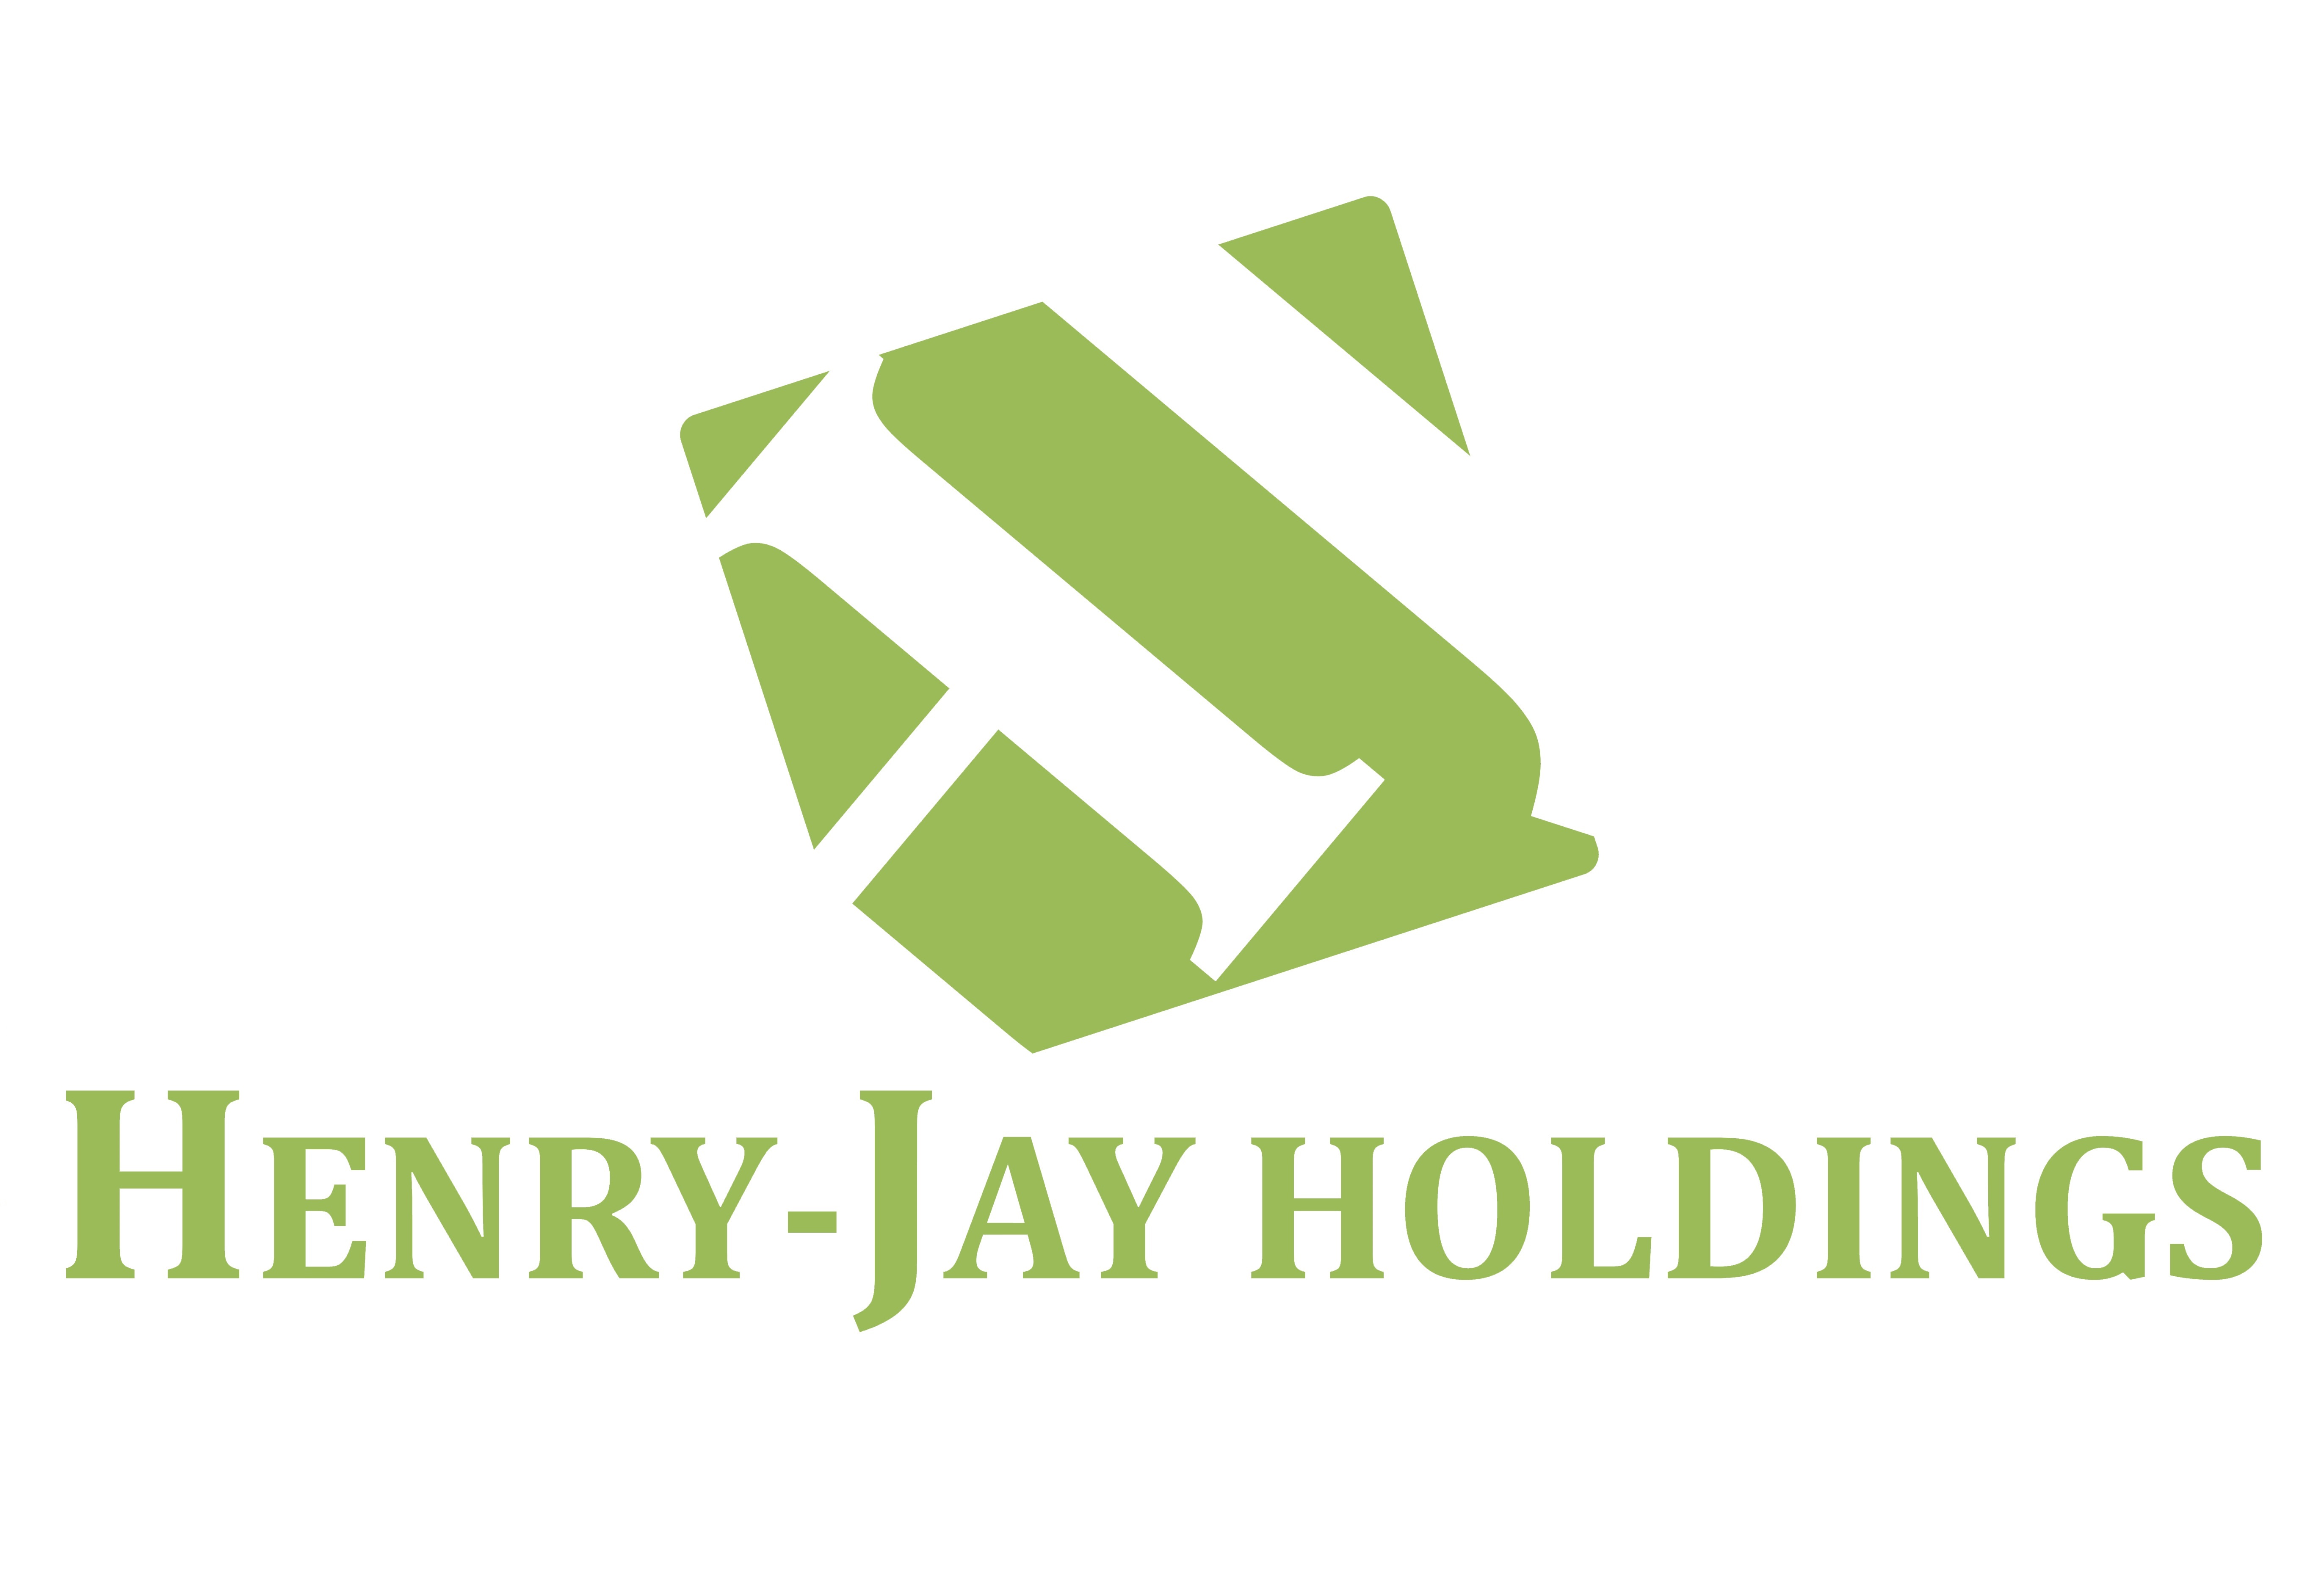 HENRY JAY HOLDINGS